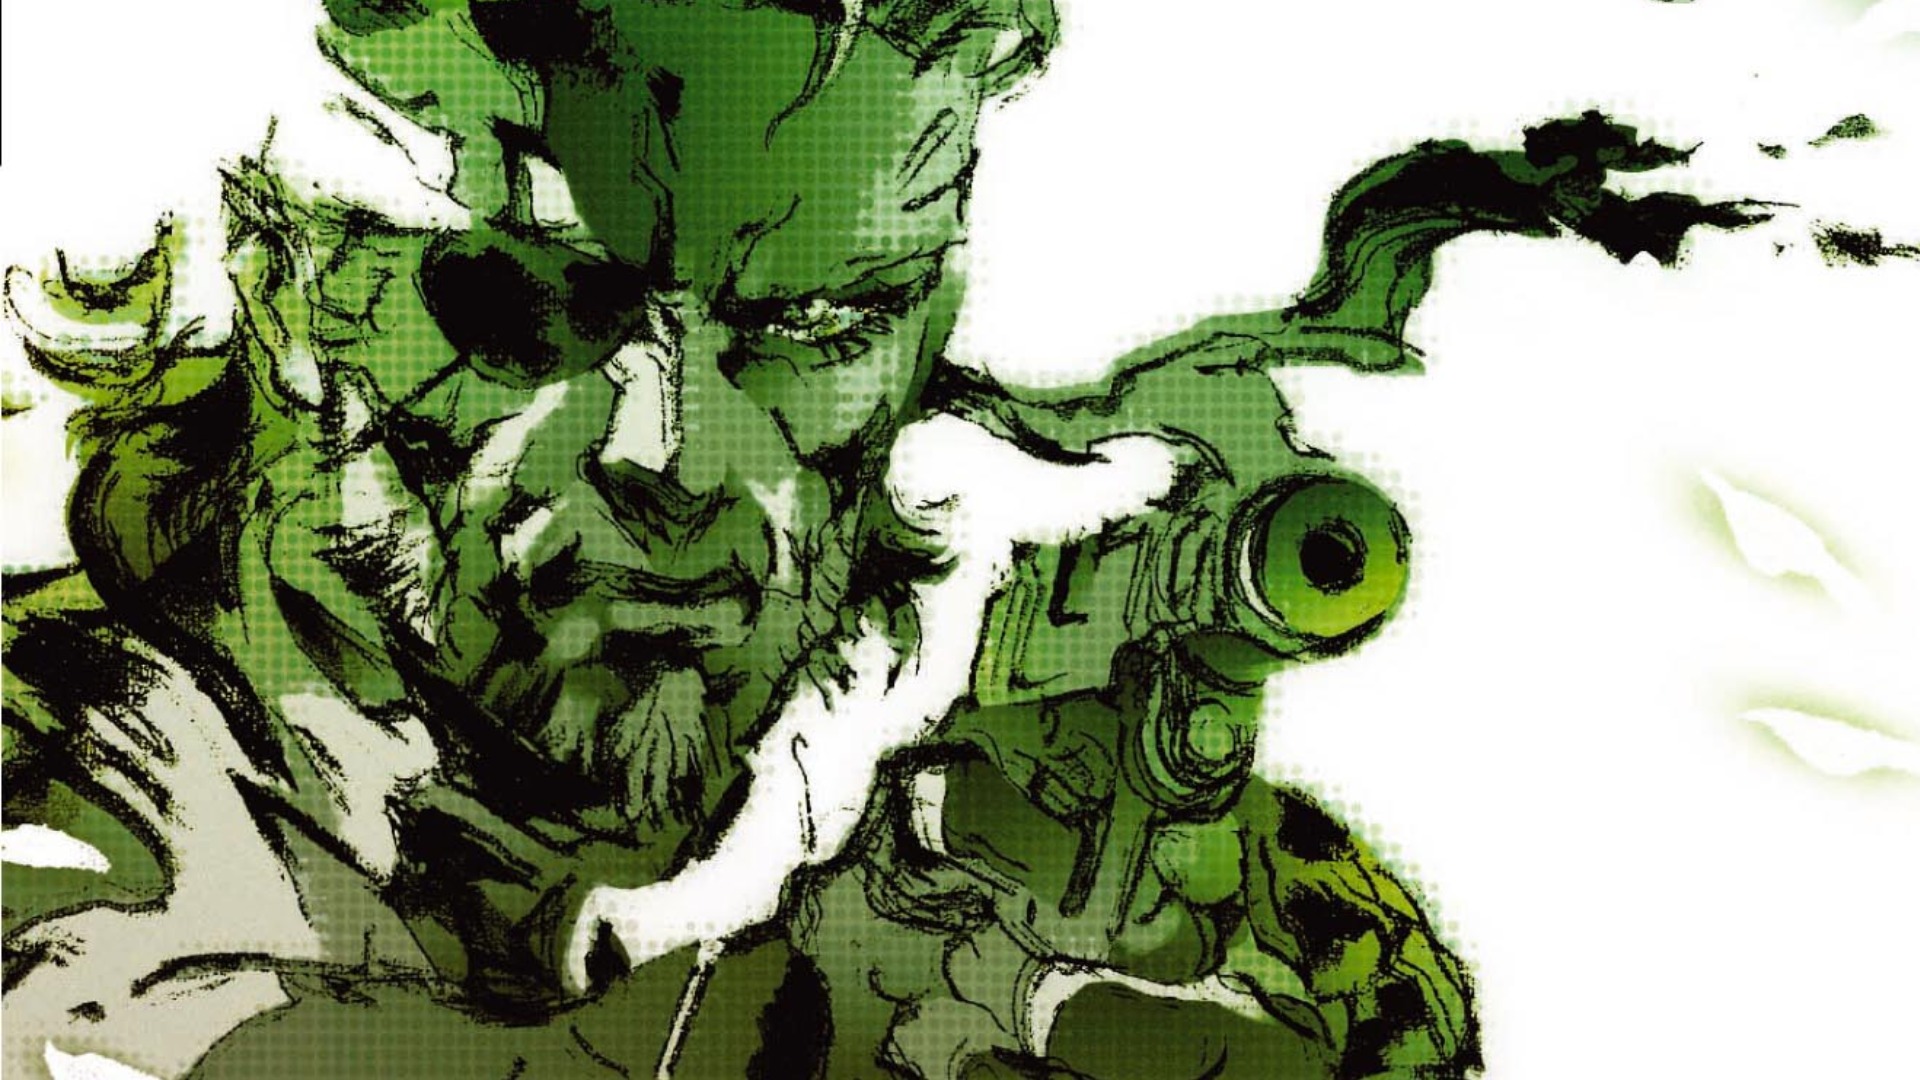 Hideo Kojima Isn't Part of 'Metal Gear Solid 3' Remake